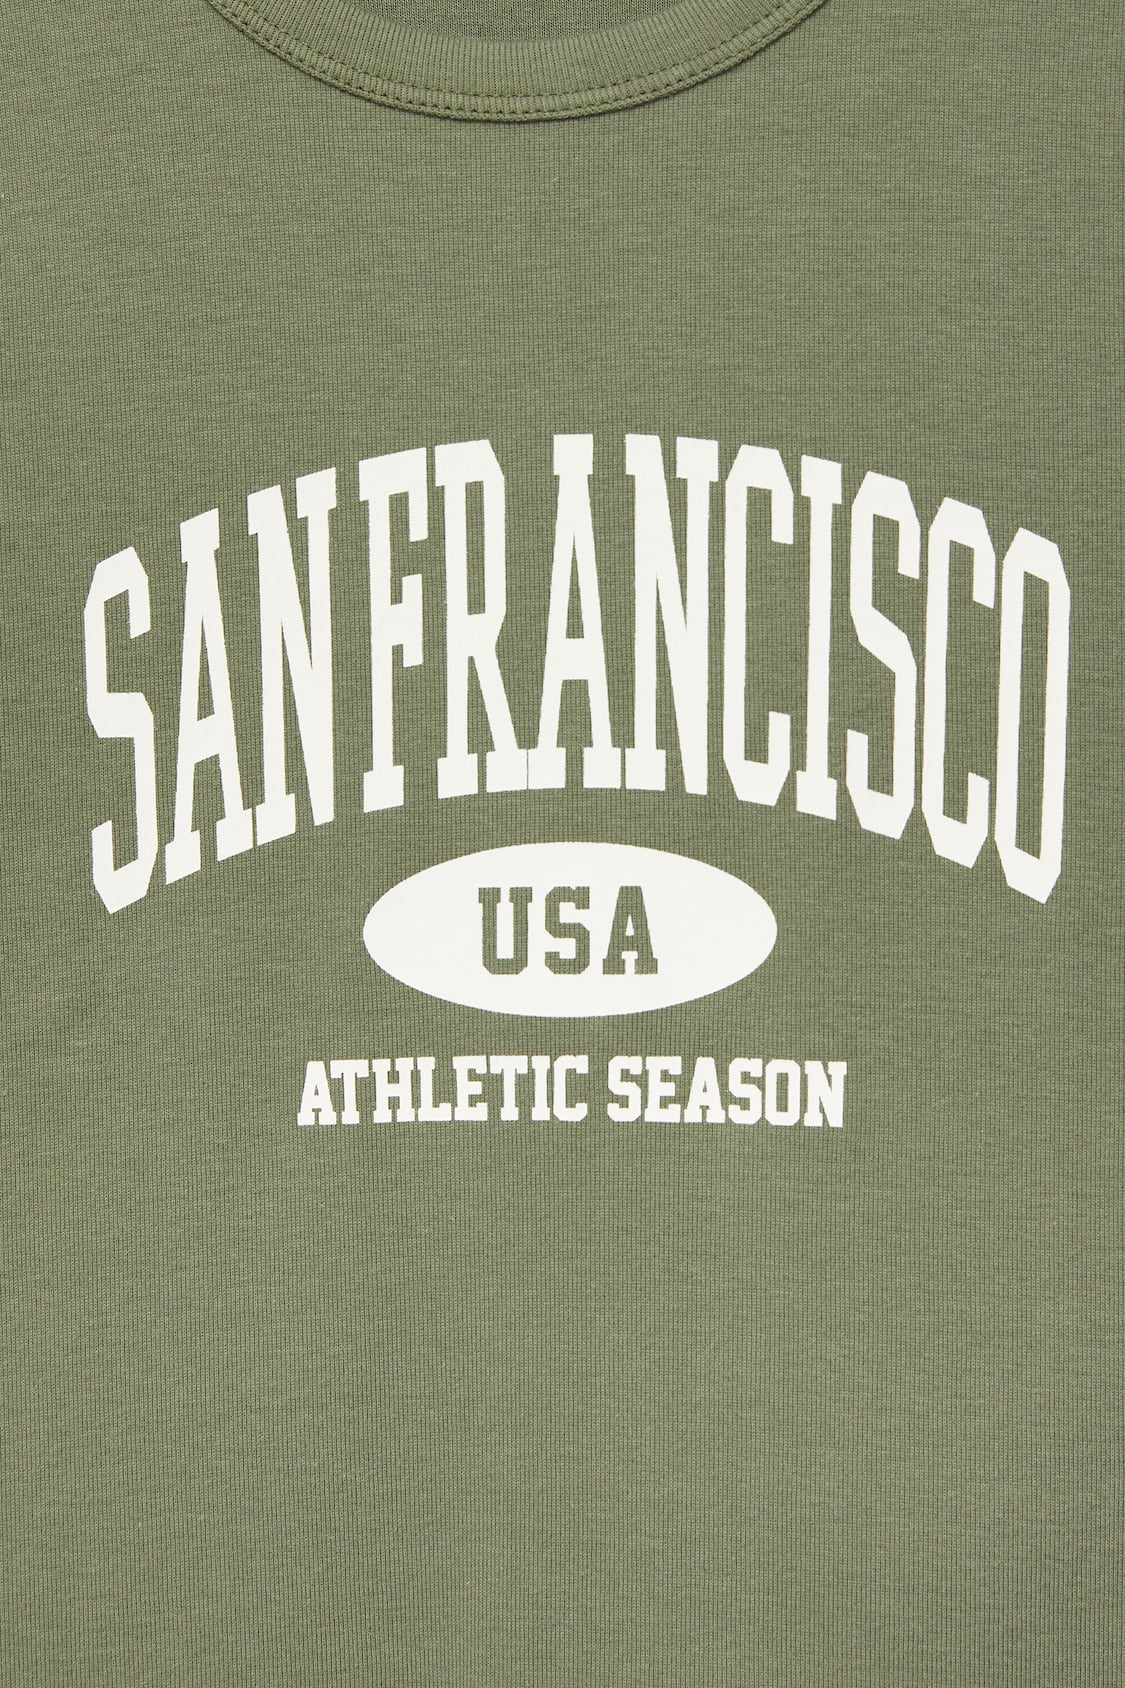 Tall San Francisco Varsity Print T-shirt